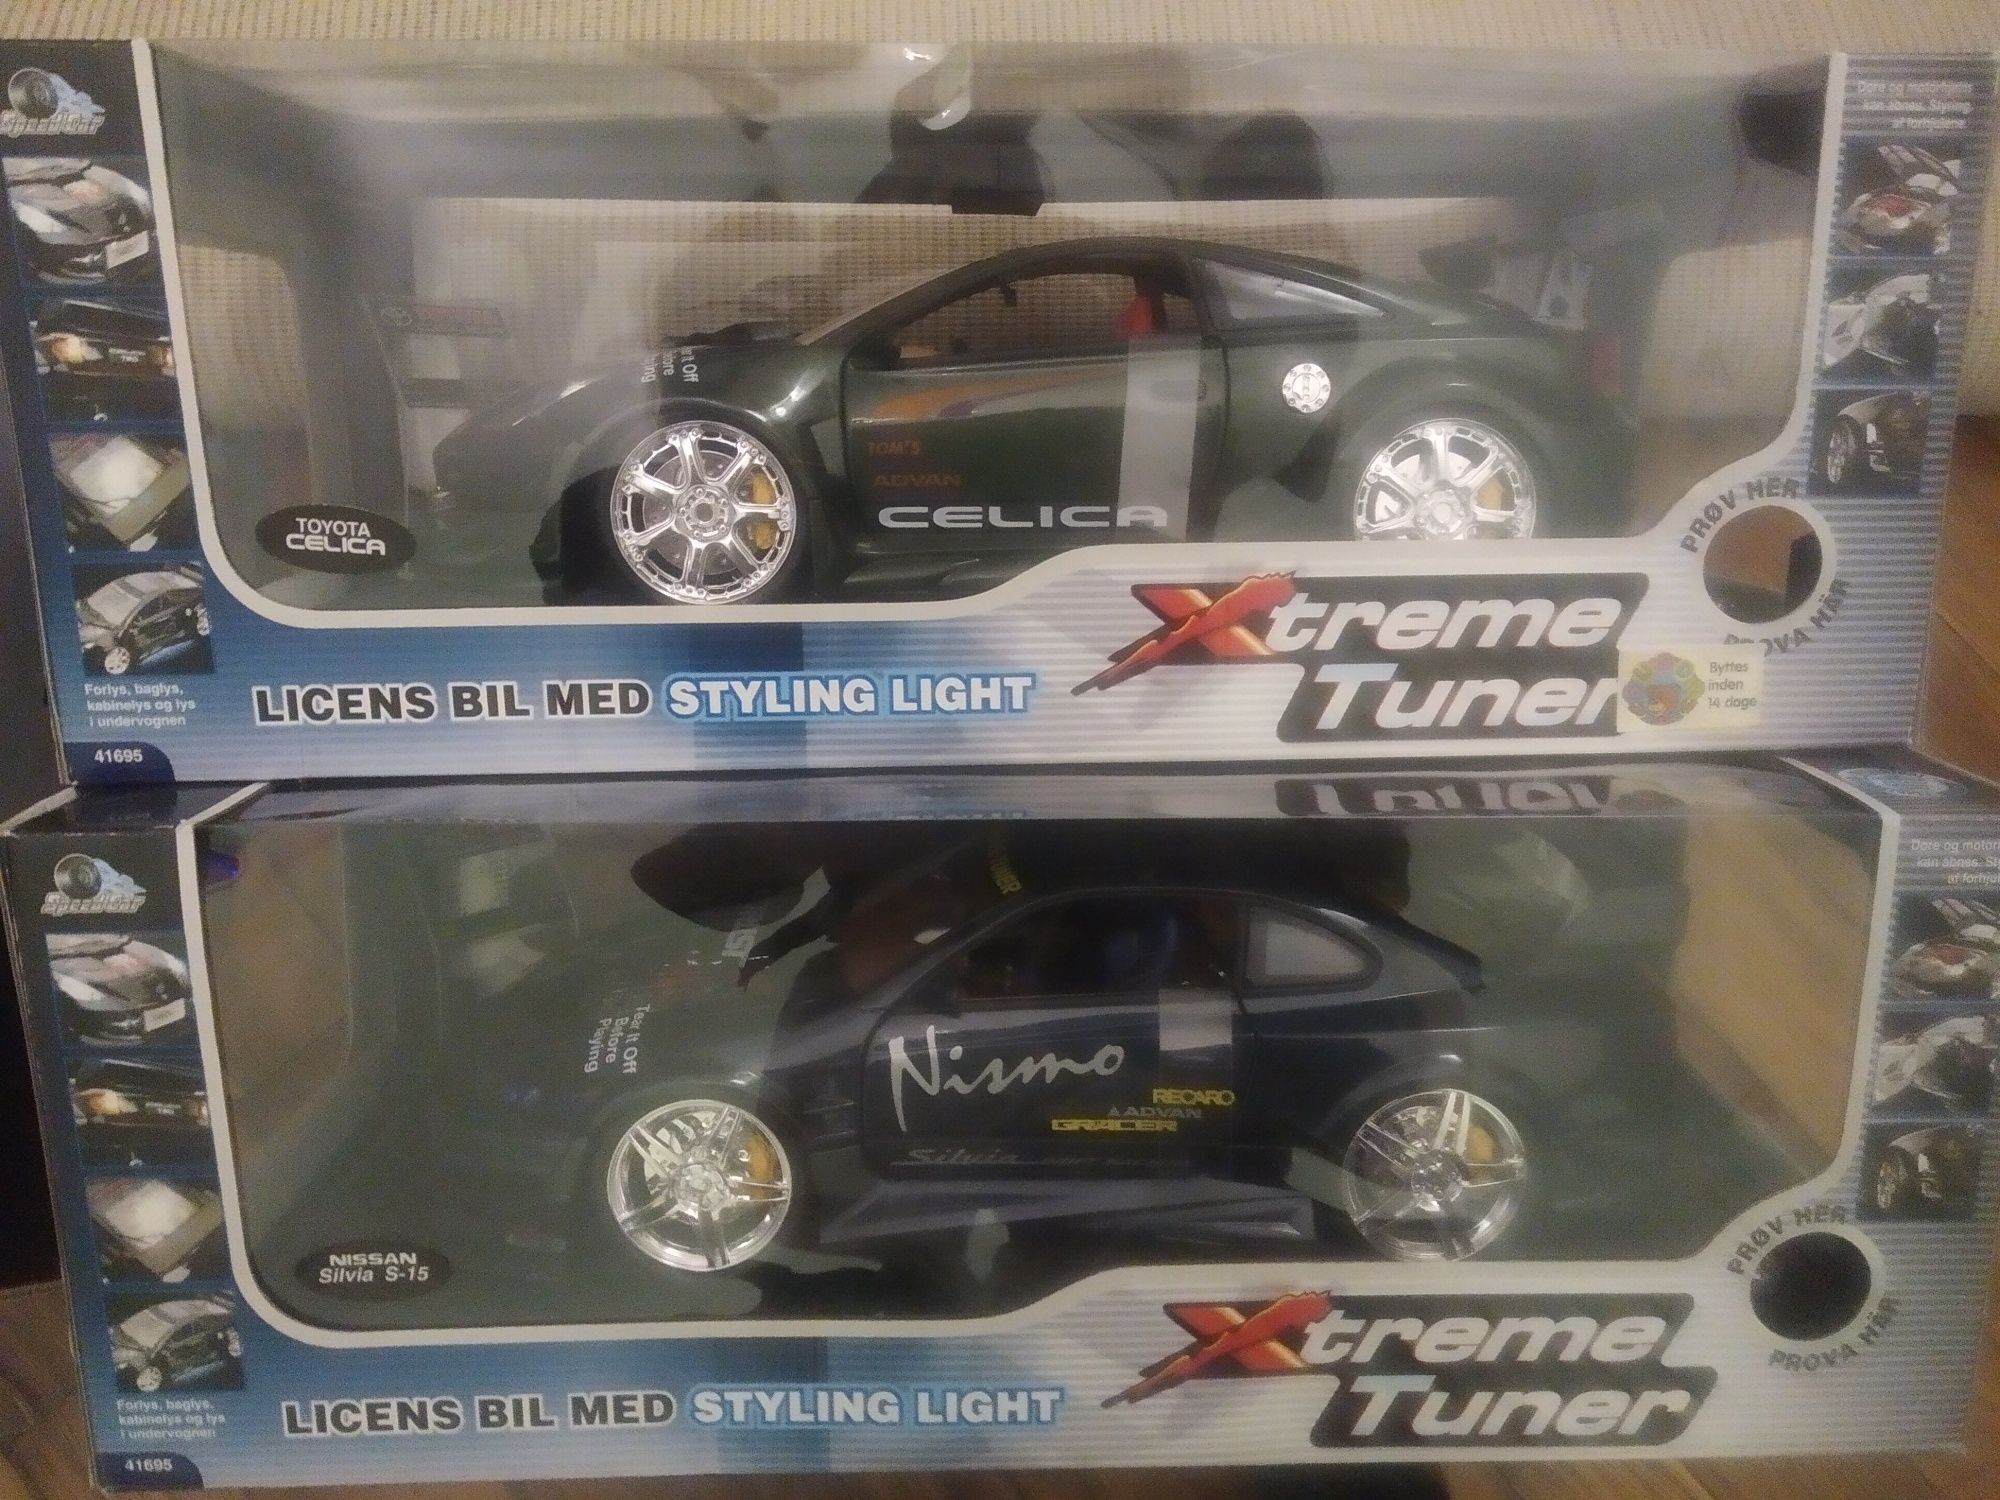 Моделі 1:12. Nissan Silvia S-15, Toyota Celica, Xtreme